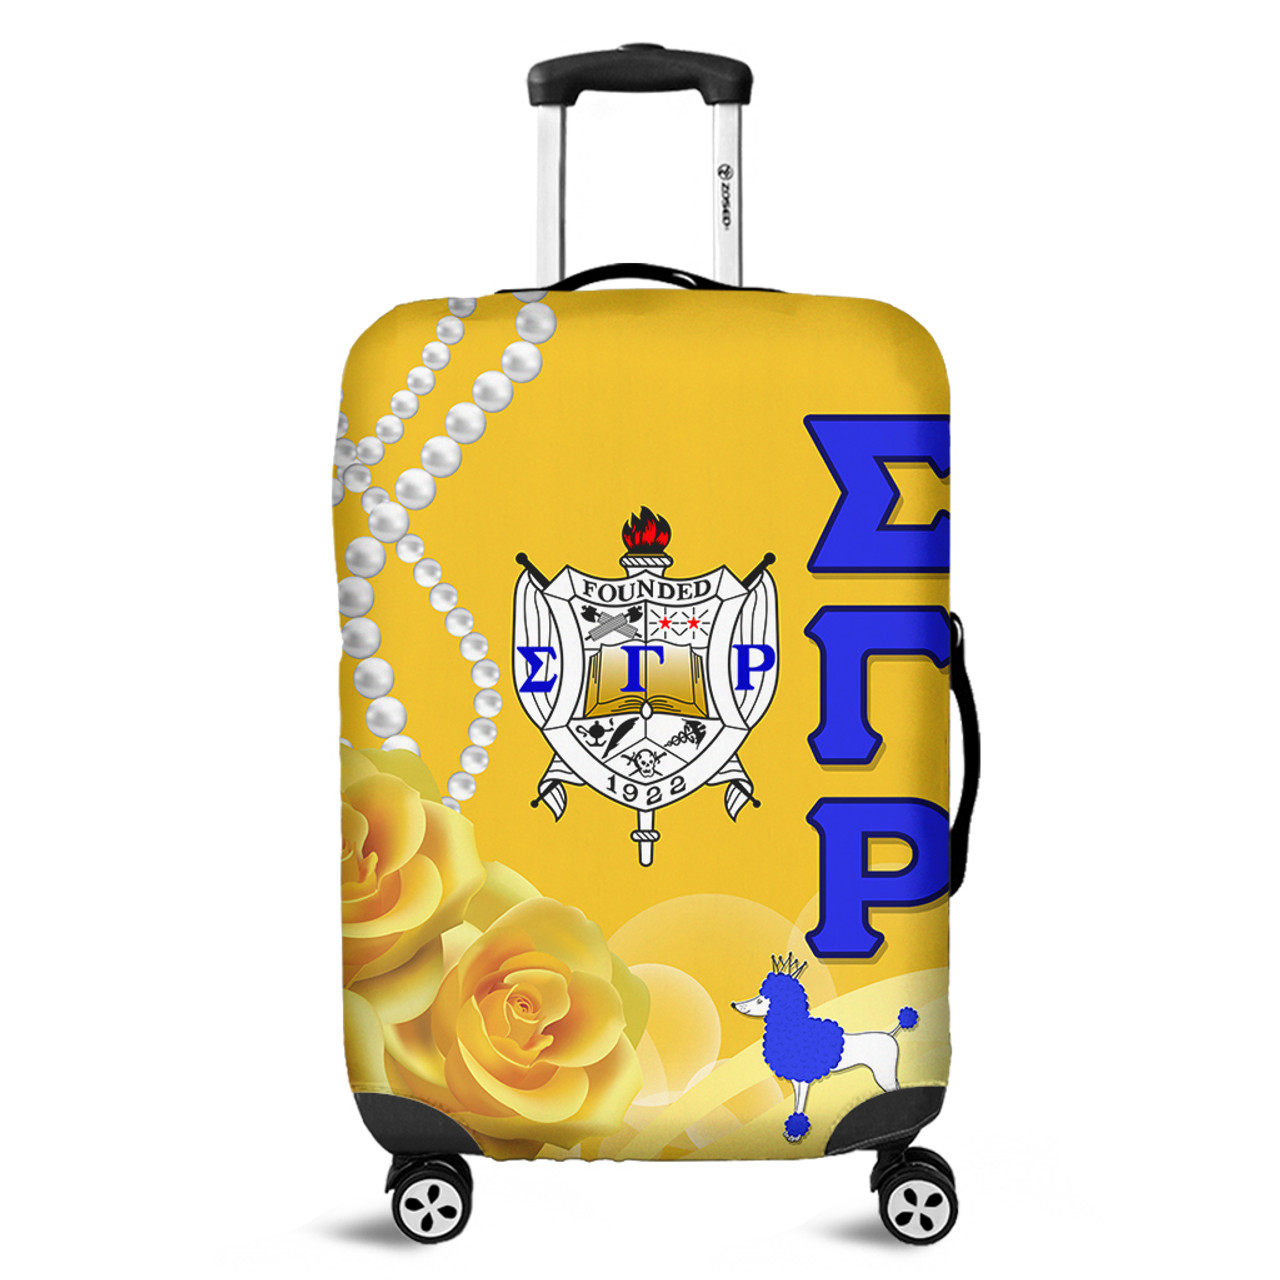 Sigma Gamma Rho Luggage Cover Rose Yellow Pearls Design